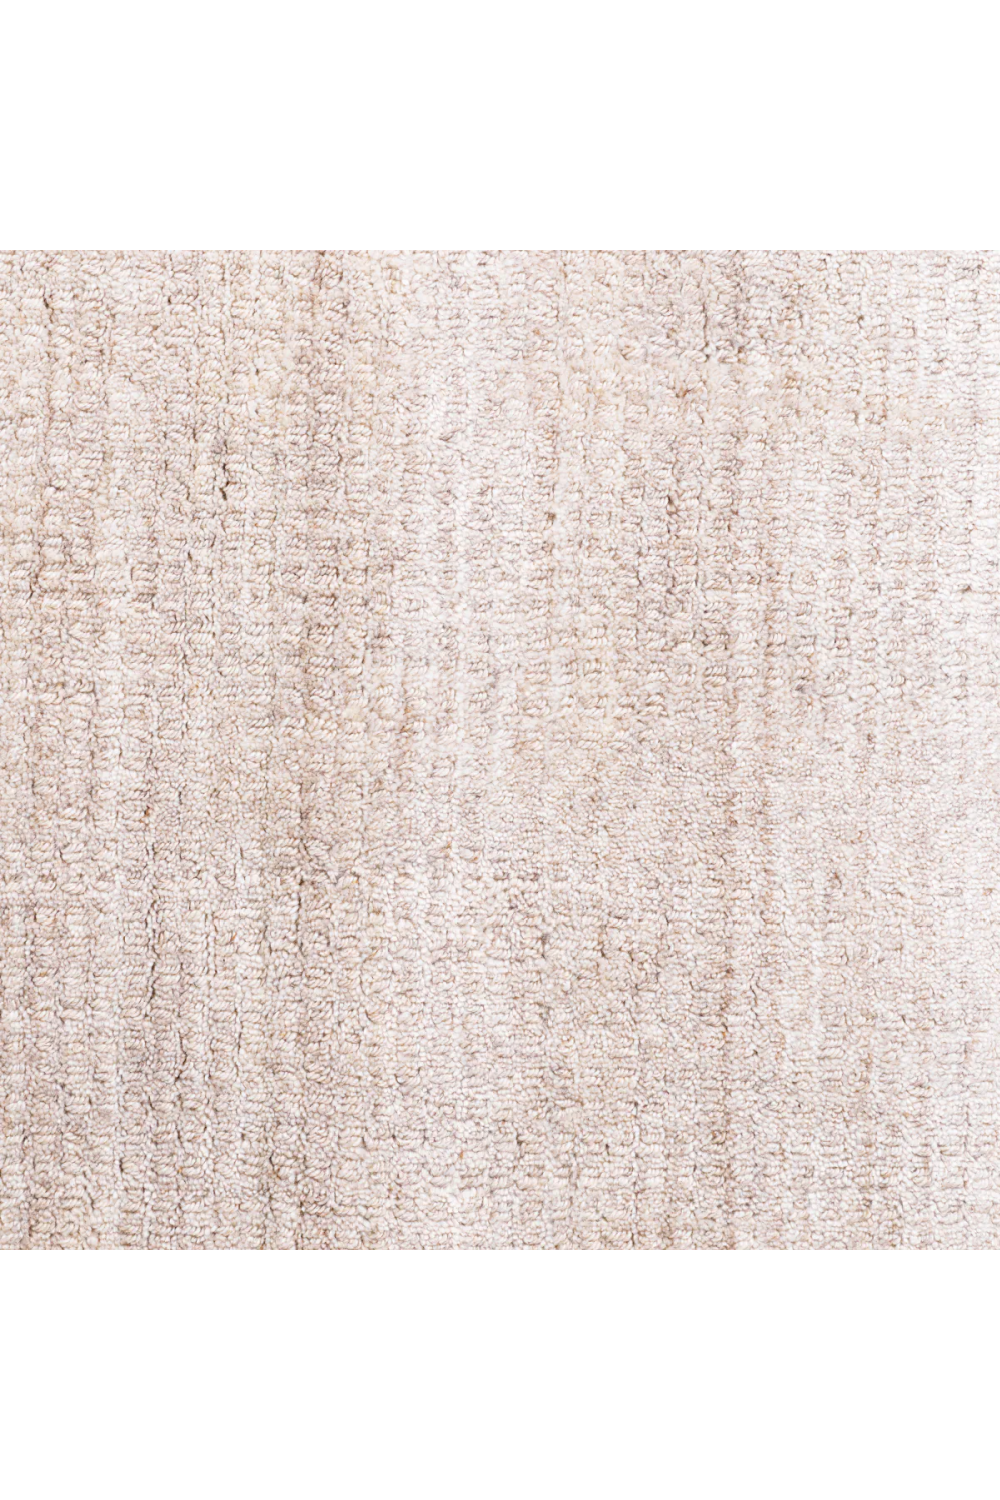 Beige Handwoven Carpet 10' x 13' | Eichholtz Pep | Oroa.com